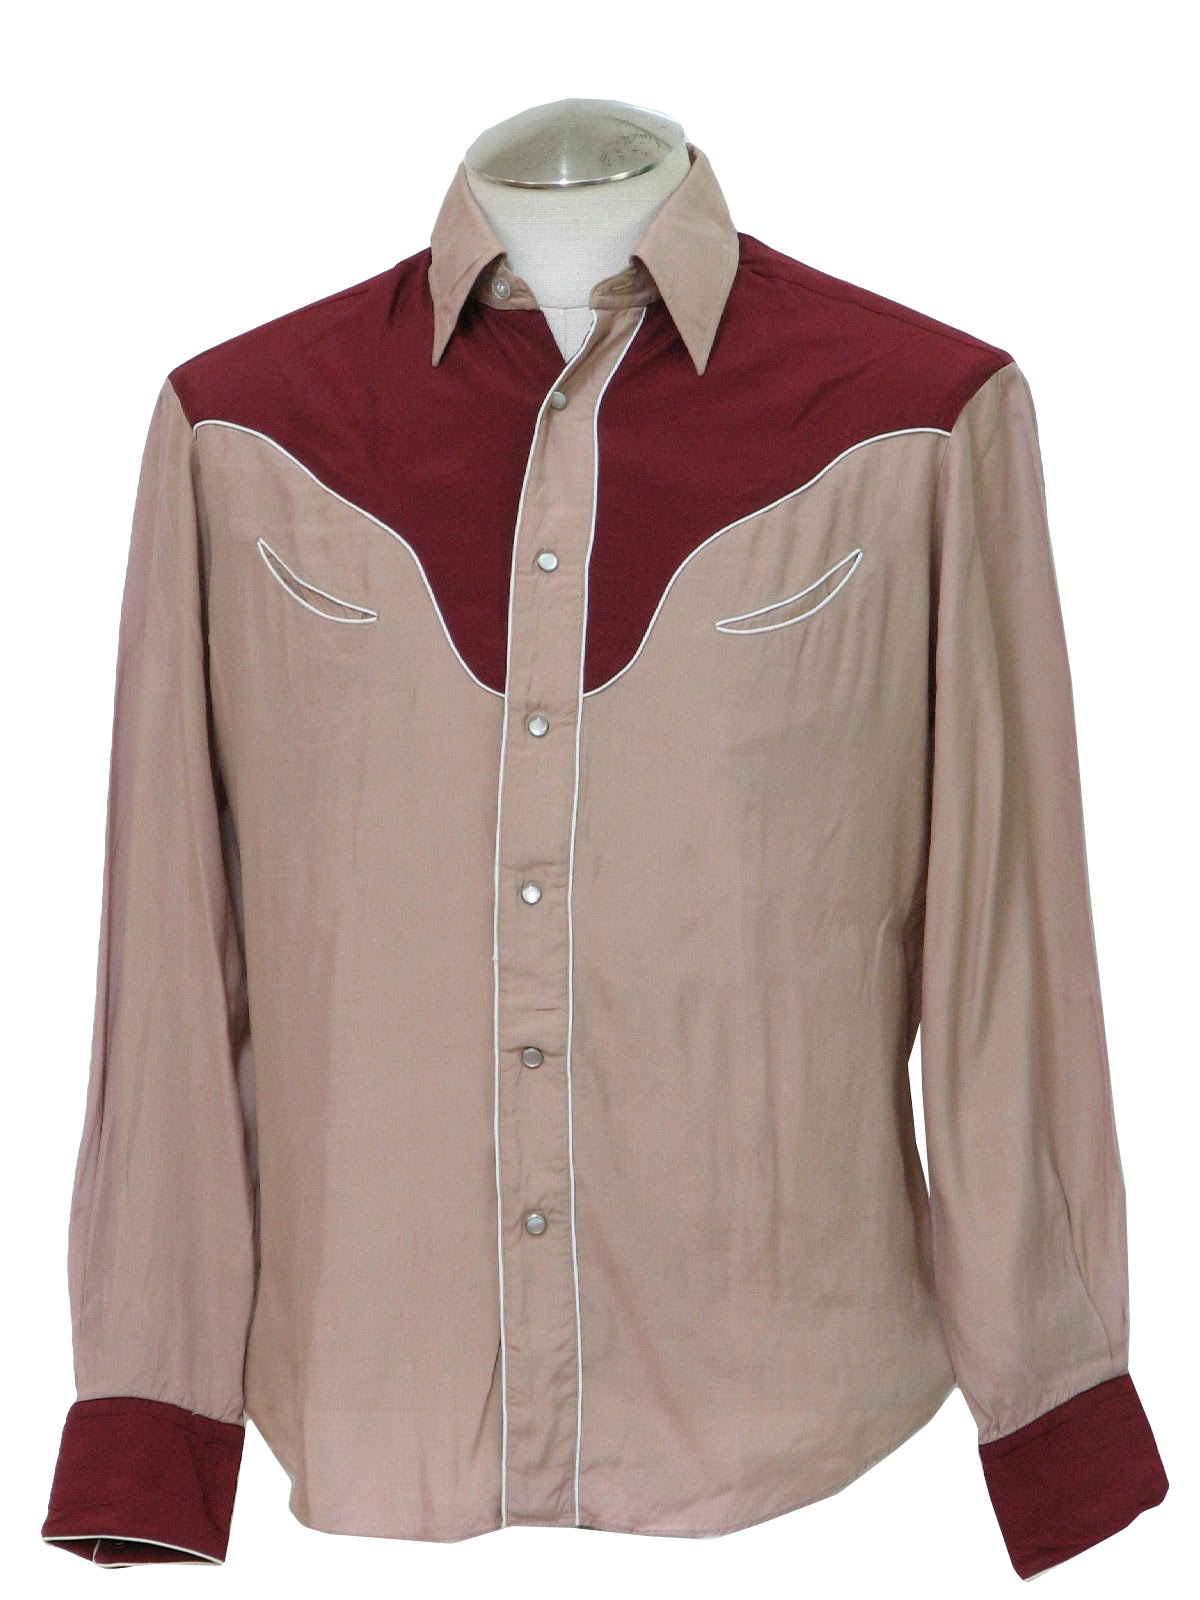 Retro 50s Western Shirt (Kennington) : 50s style (made in 80s ...